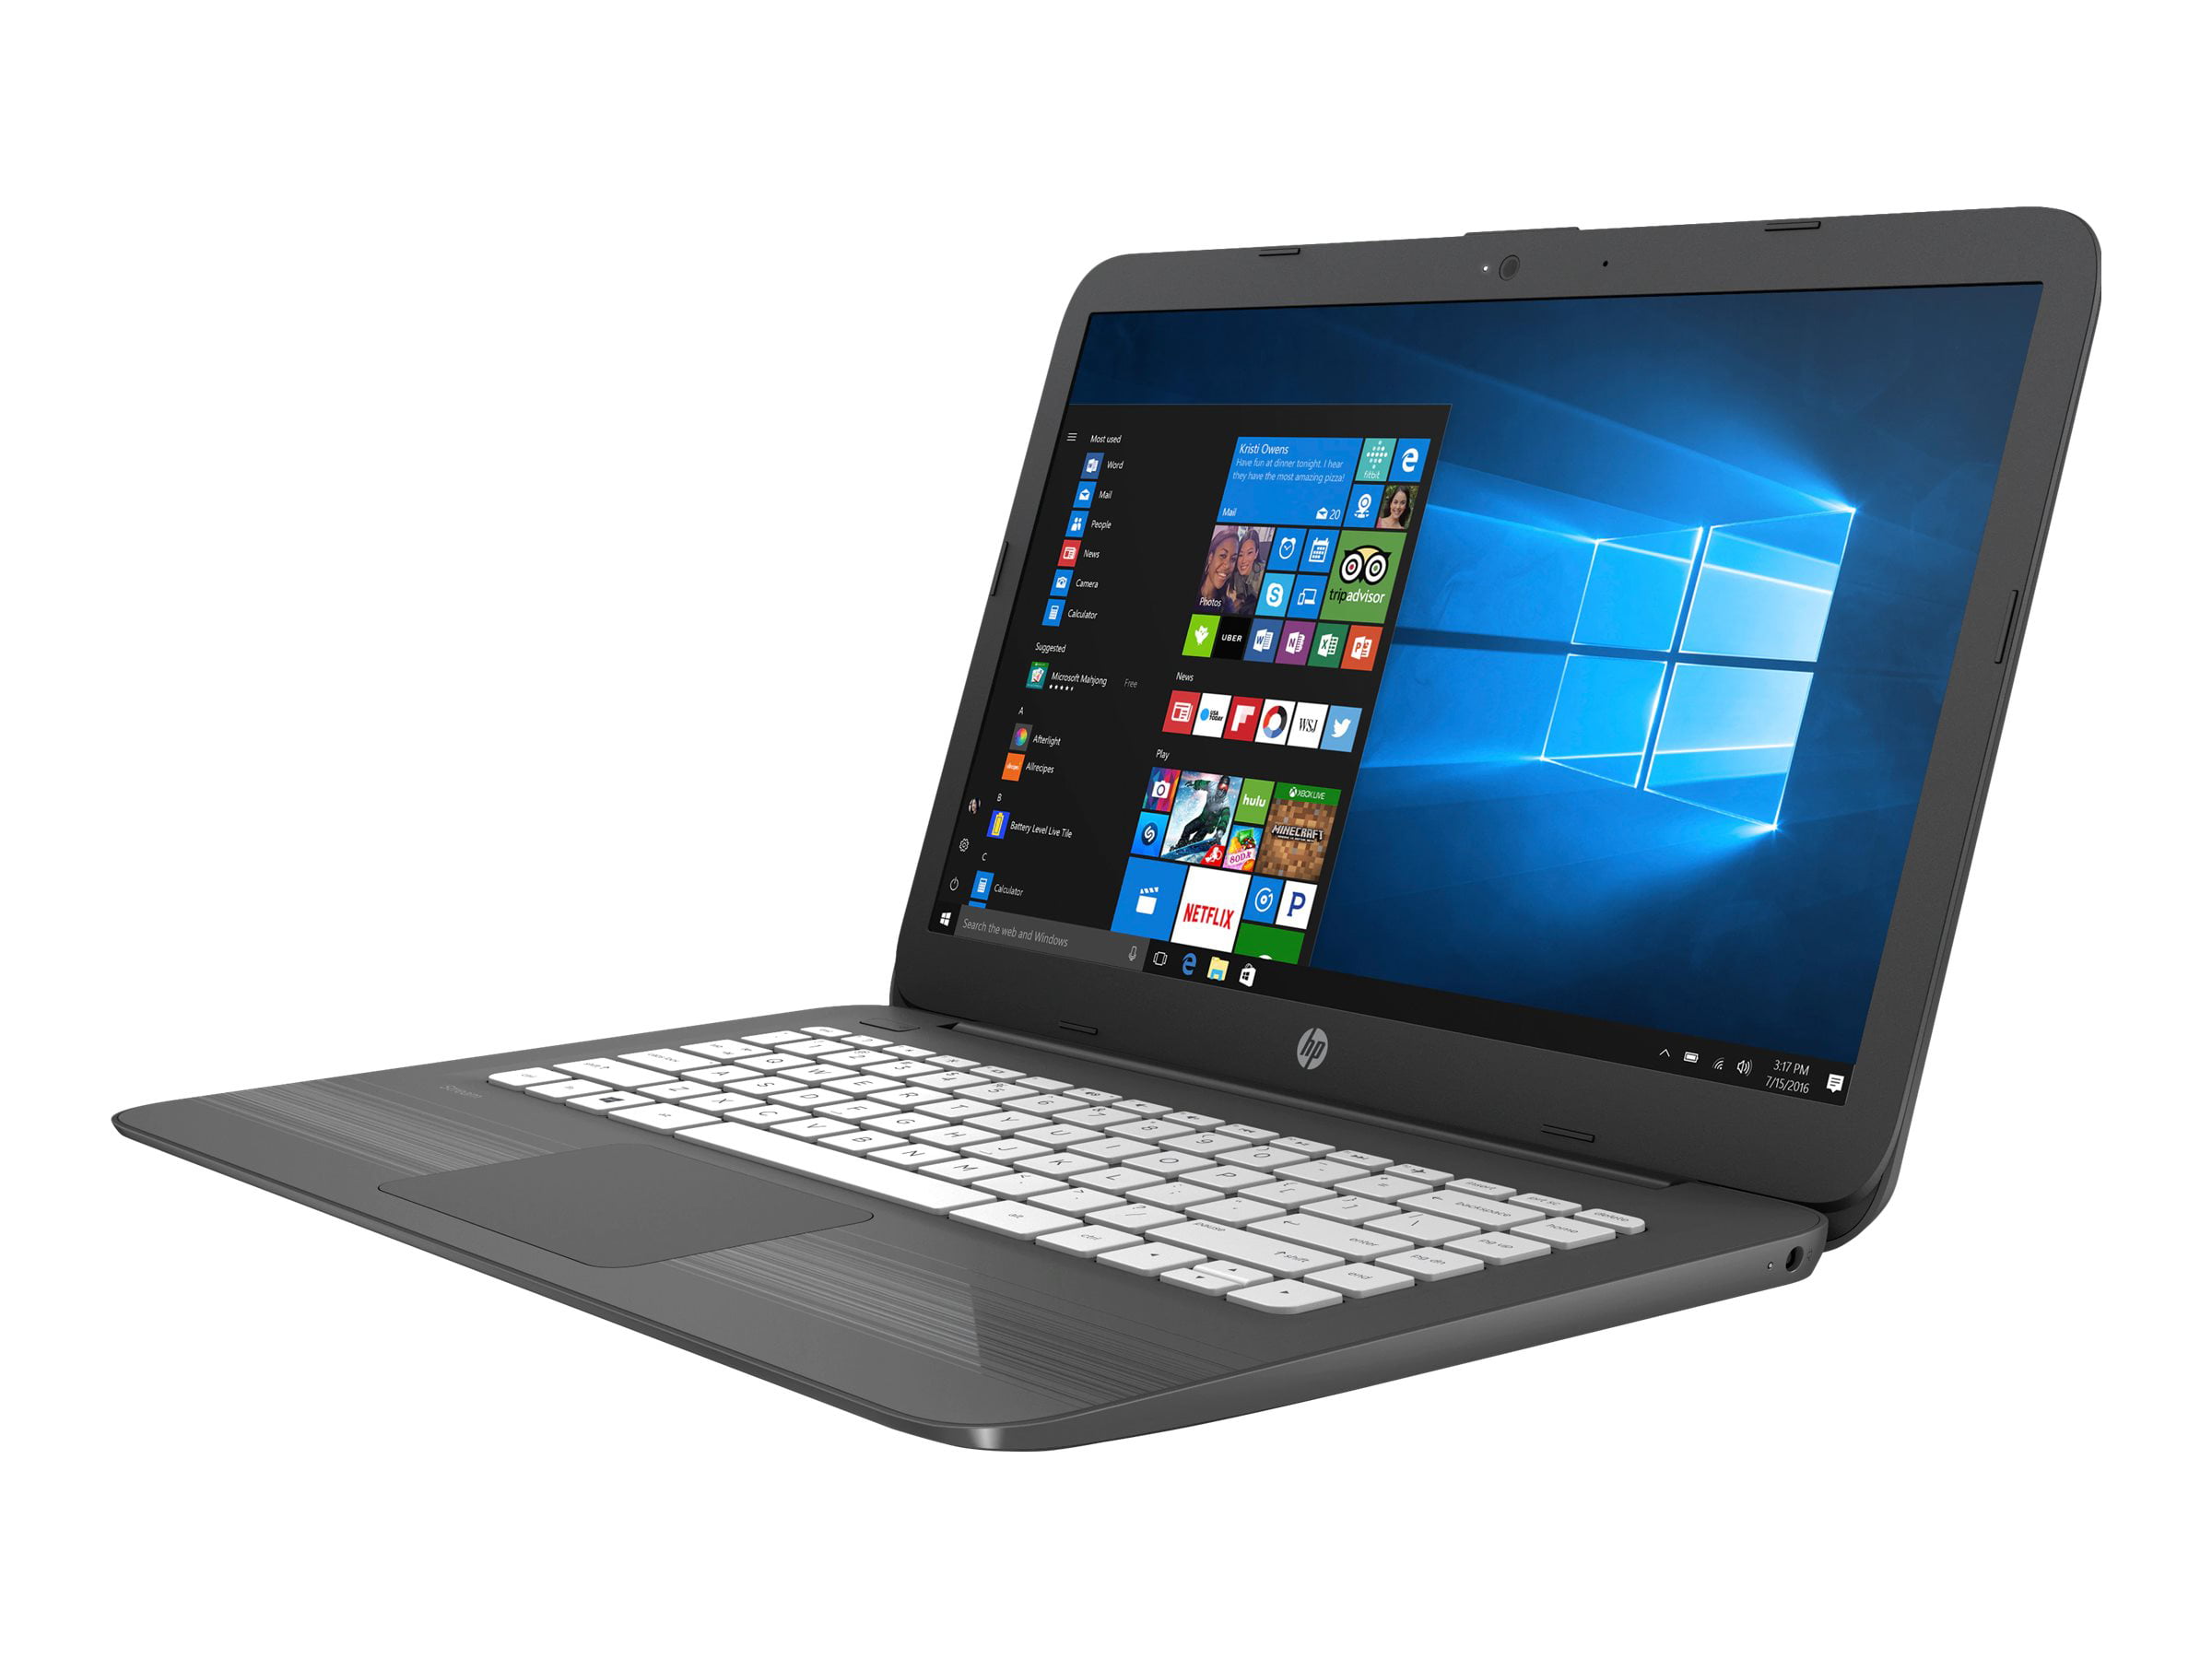 HP Stream Laptop 14-cb130nr - Intel Celeron N4000 / 1.1 GHz - Win 10 Home in S mode - UHD Graphics 600 - 4 GB RAM - 32 GB eMMC